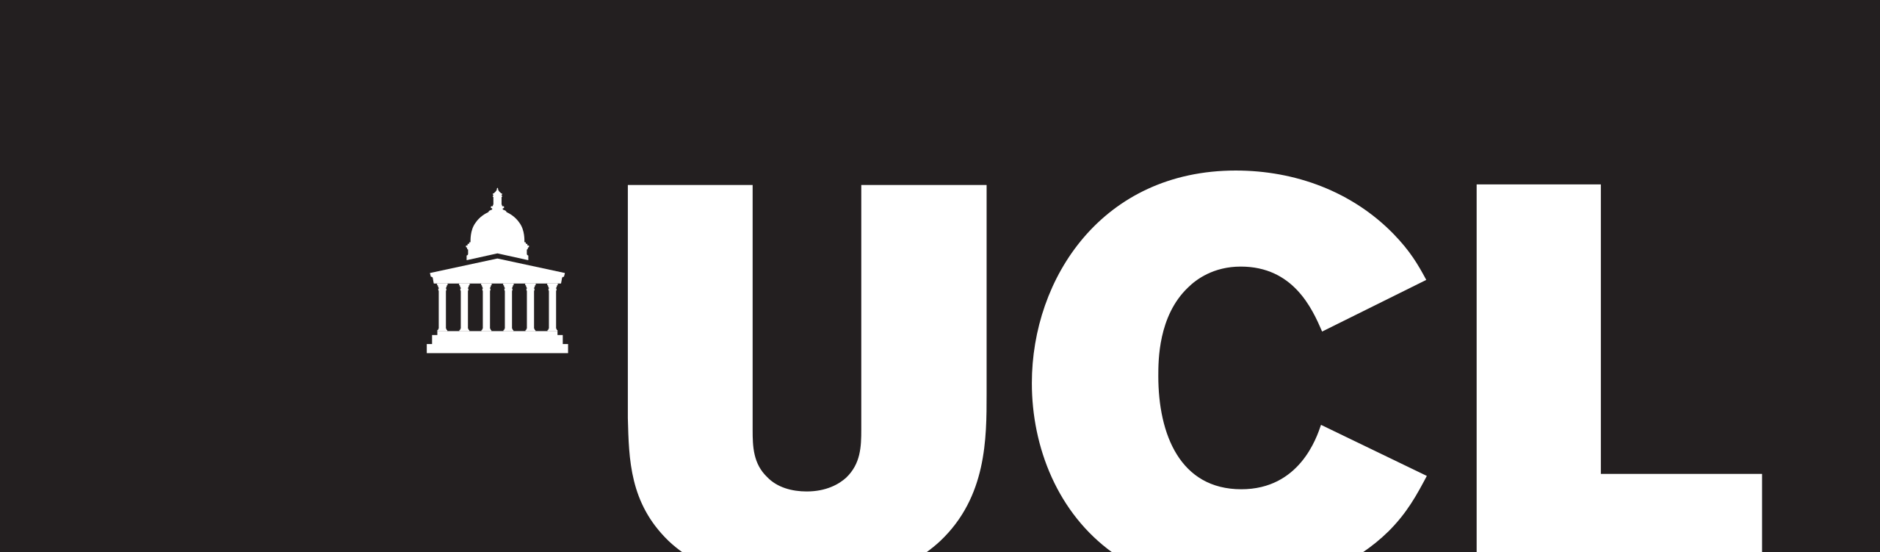 University College London logo.